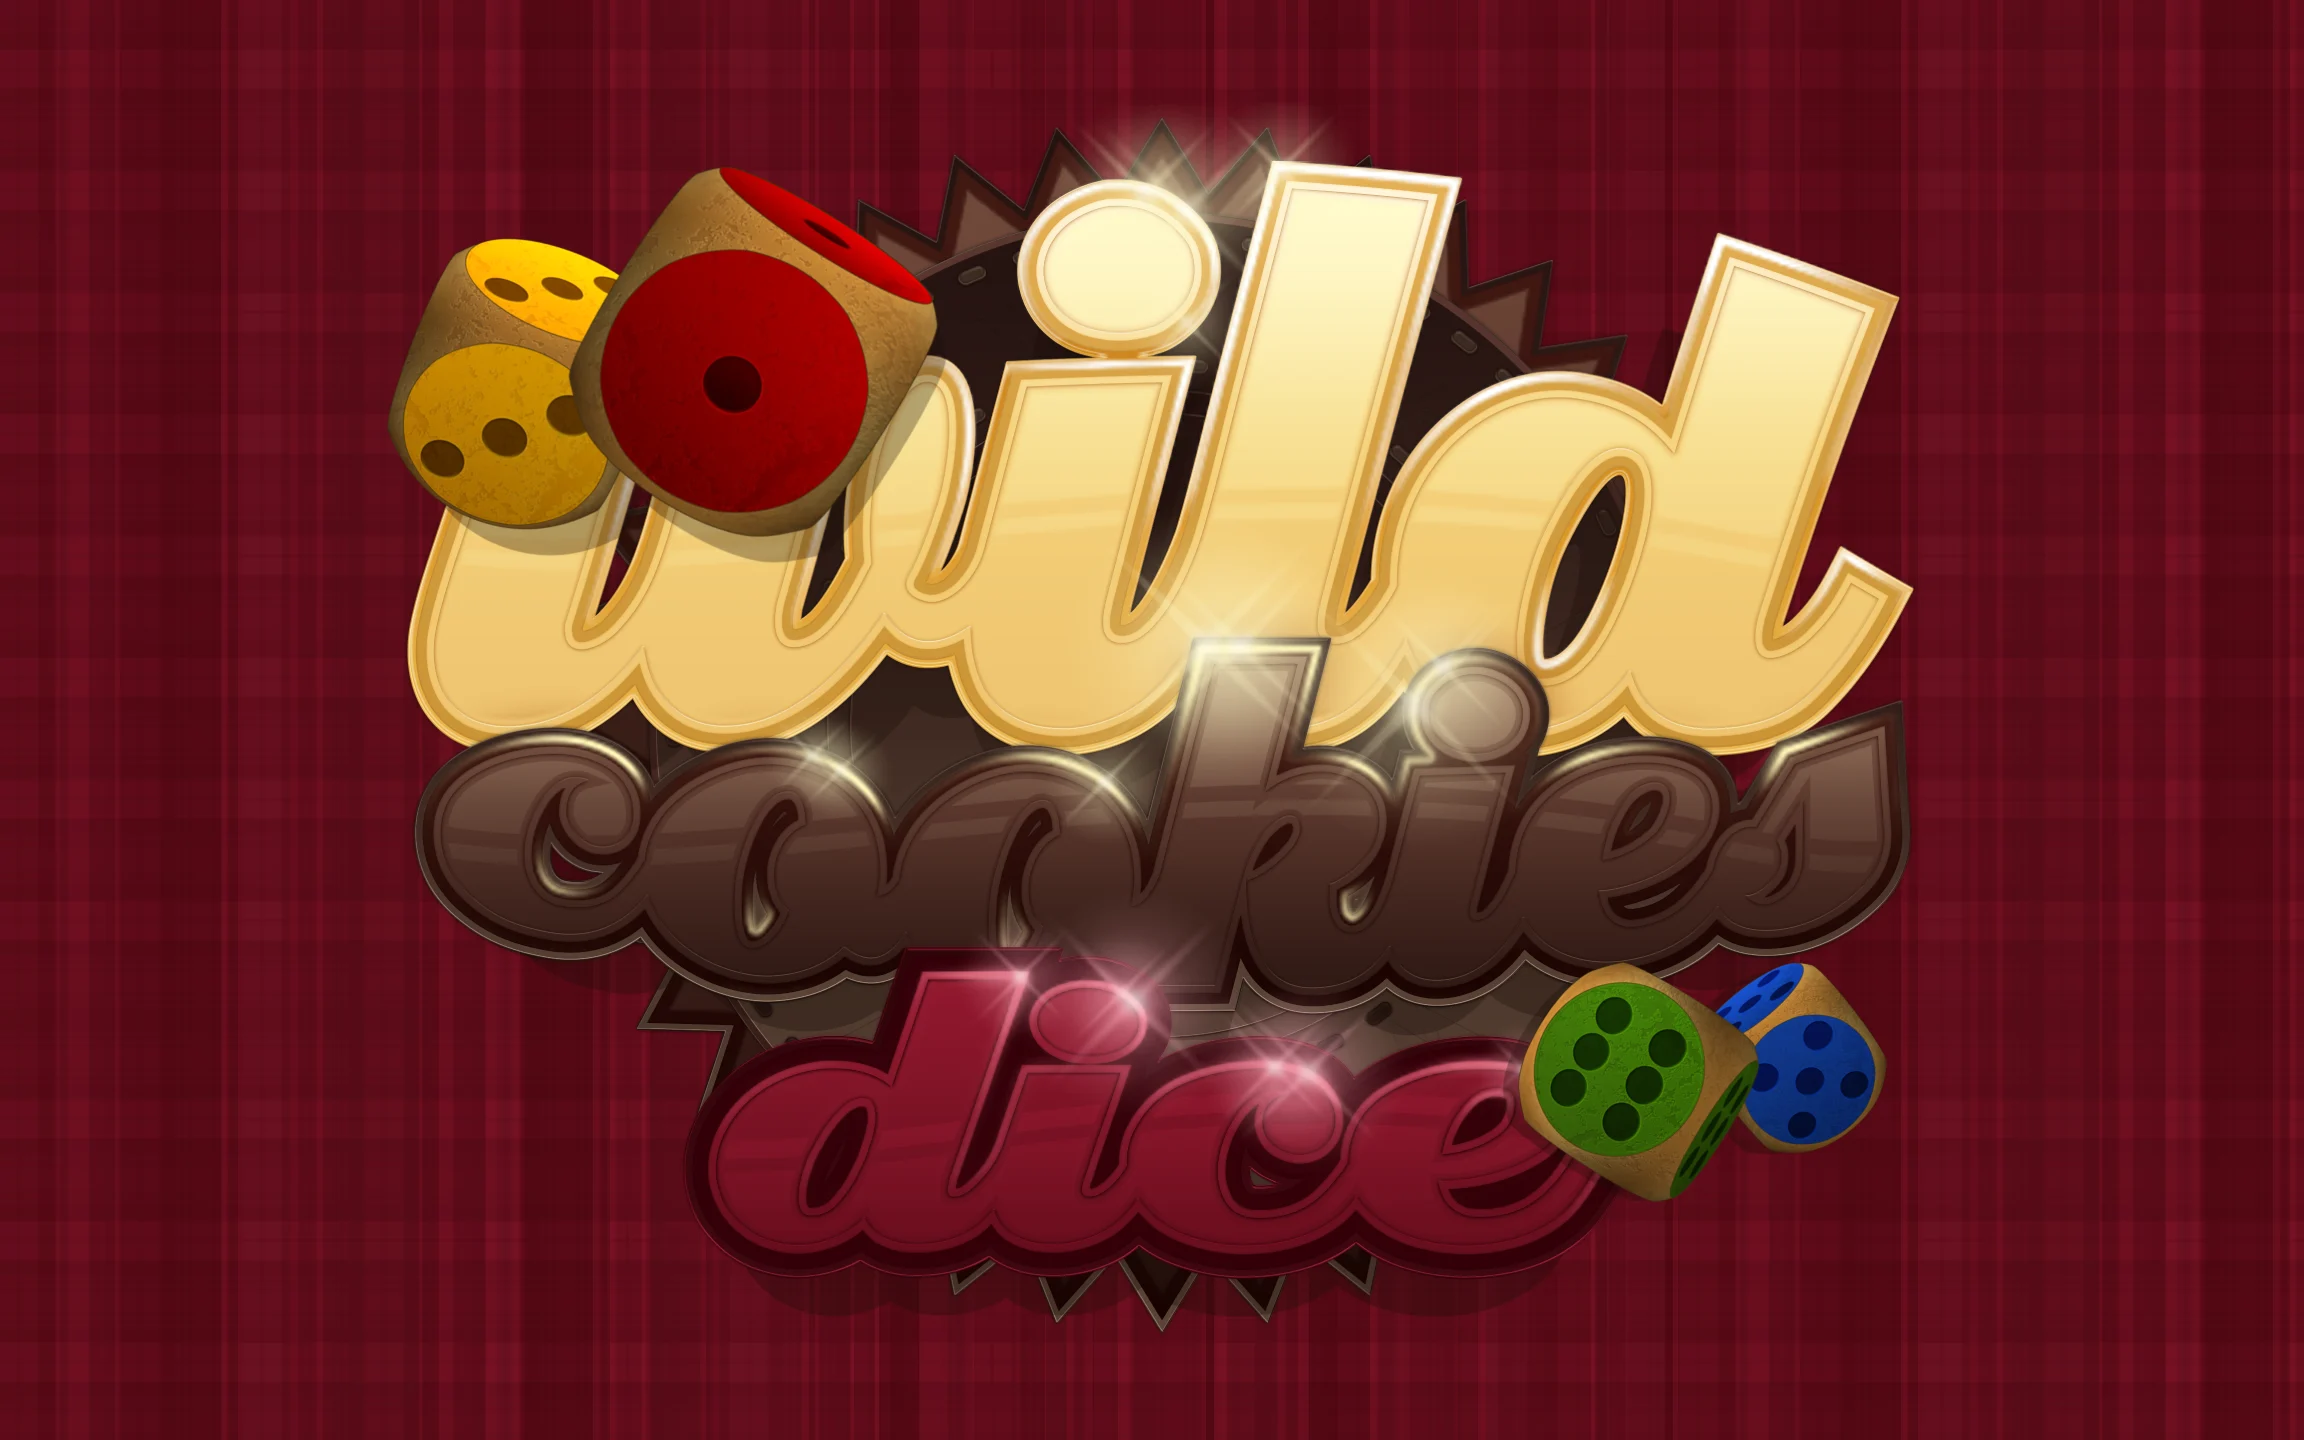 Jogue Wild Cookies Dice no casino online Starcasino.be 